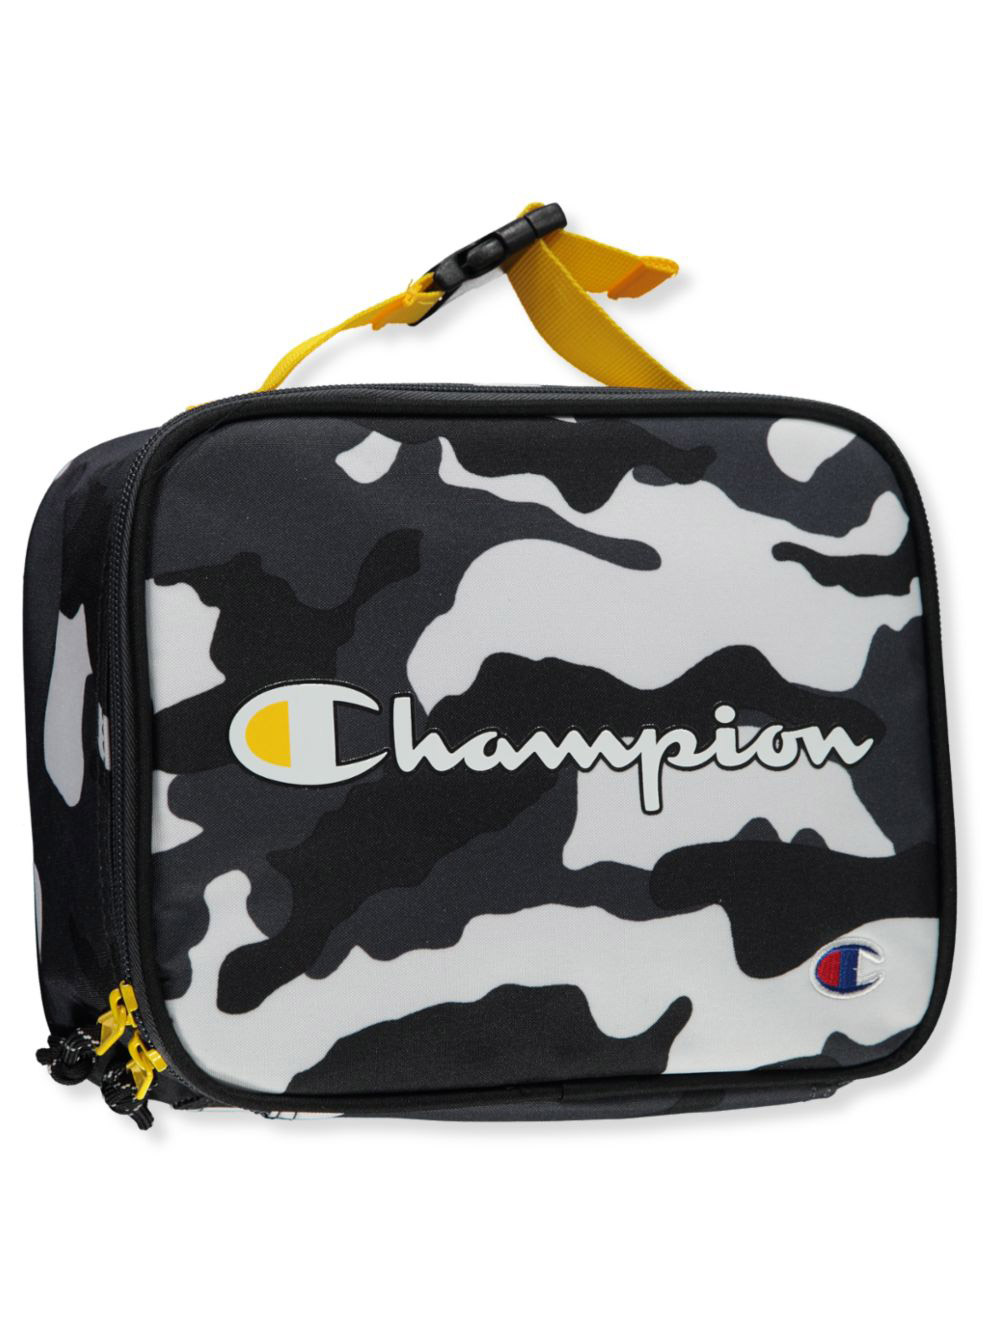 10+ Champion Lunch Box